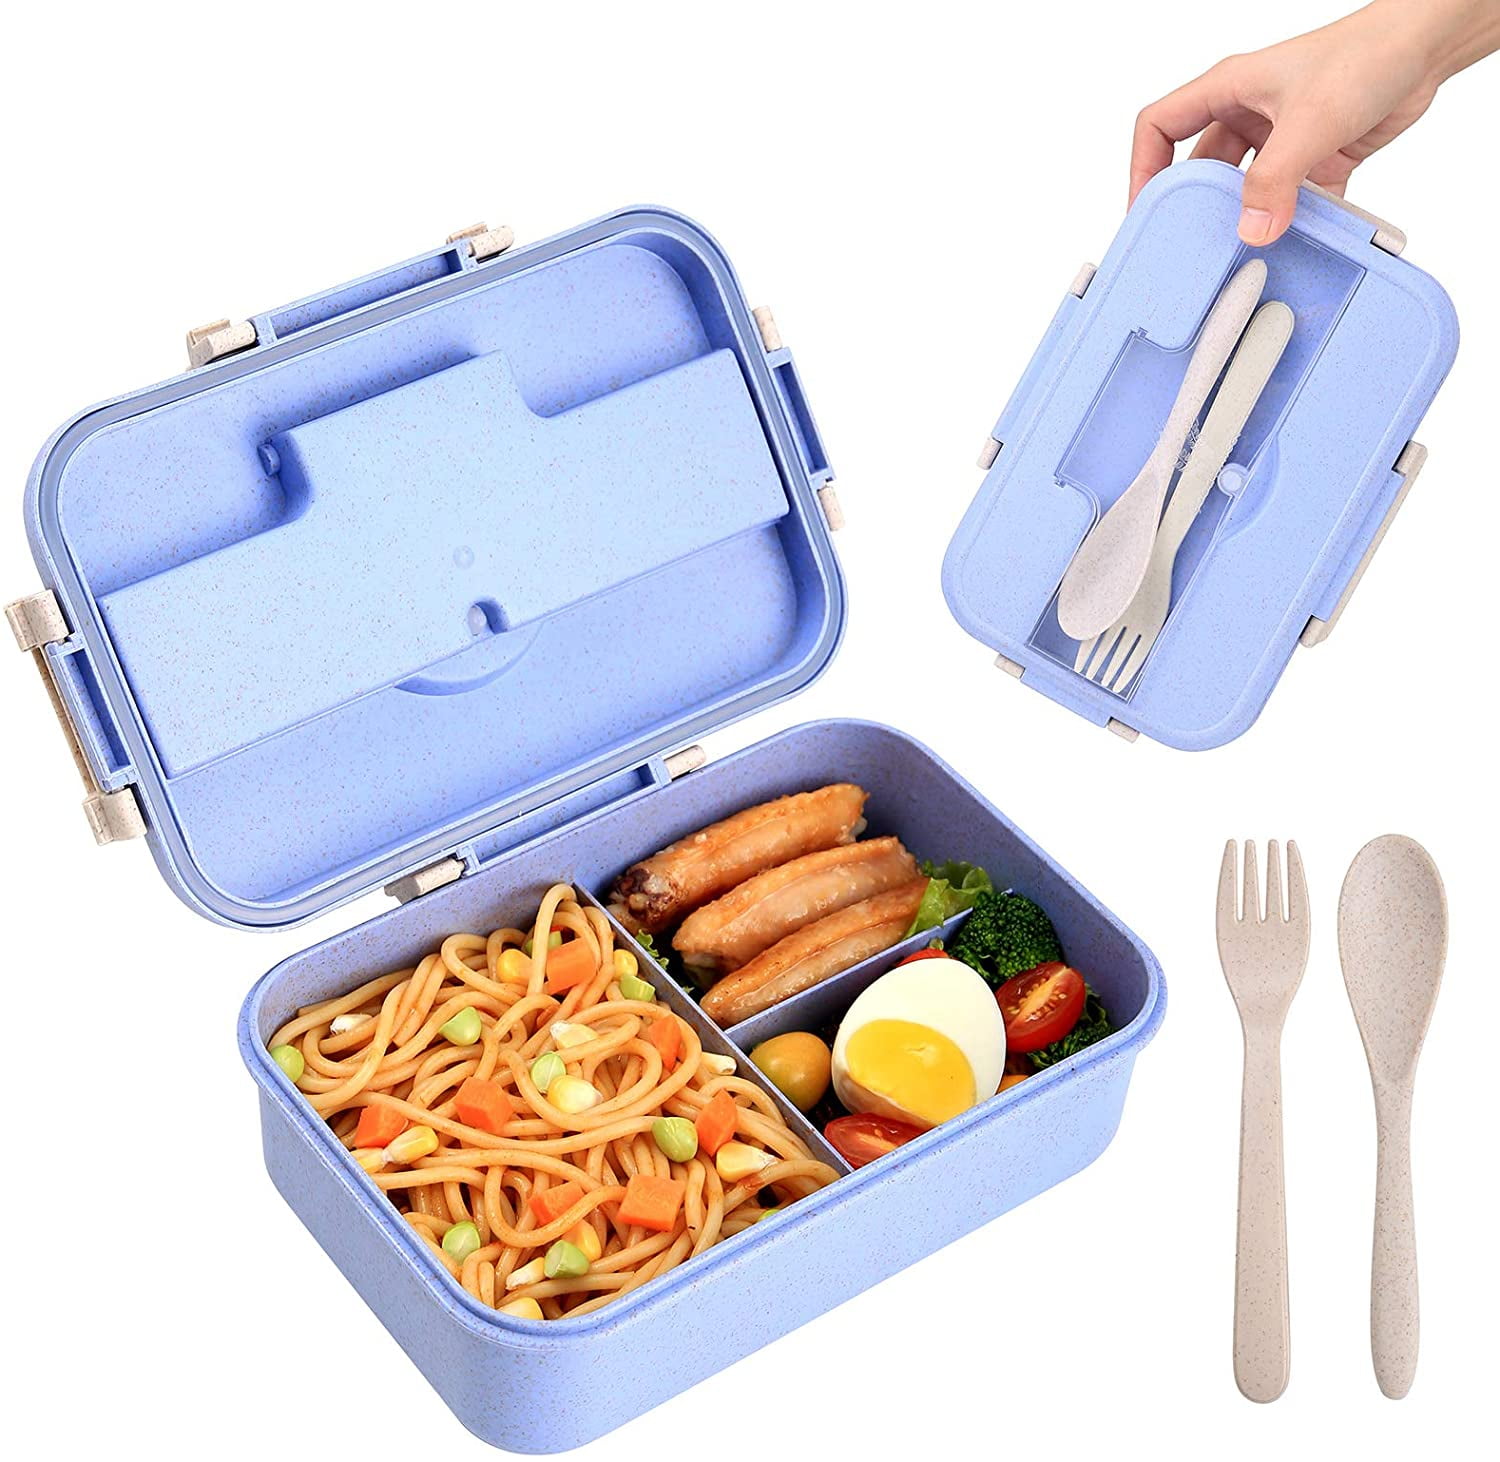  Mektler Stainless Steel Wheat Straw Lunch Box for Kids